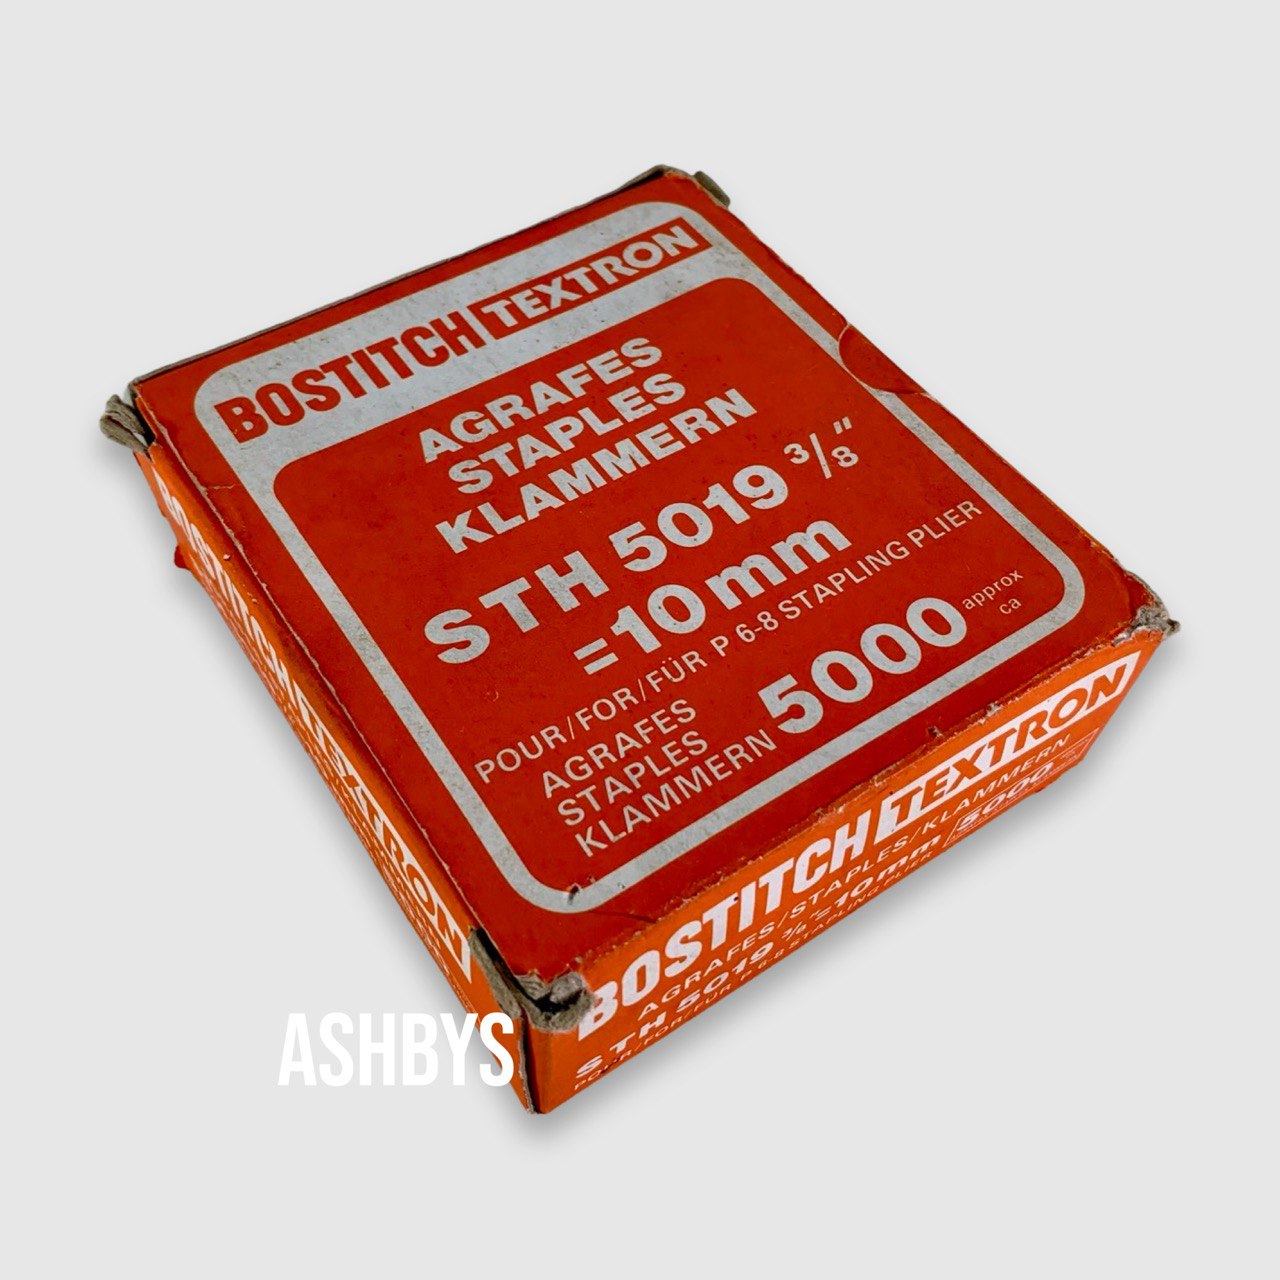 5000 x Bostitch Textron Staples STH5019 3/8 inch / 10mm